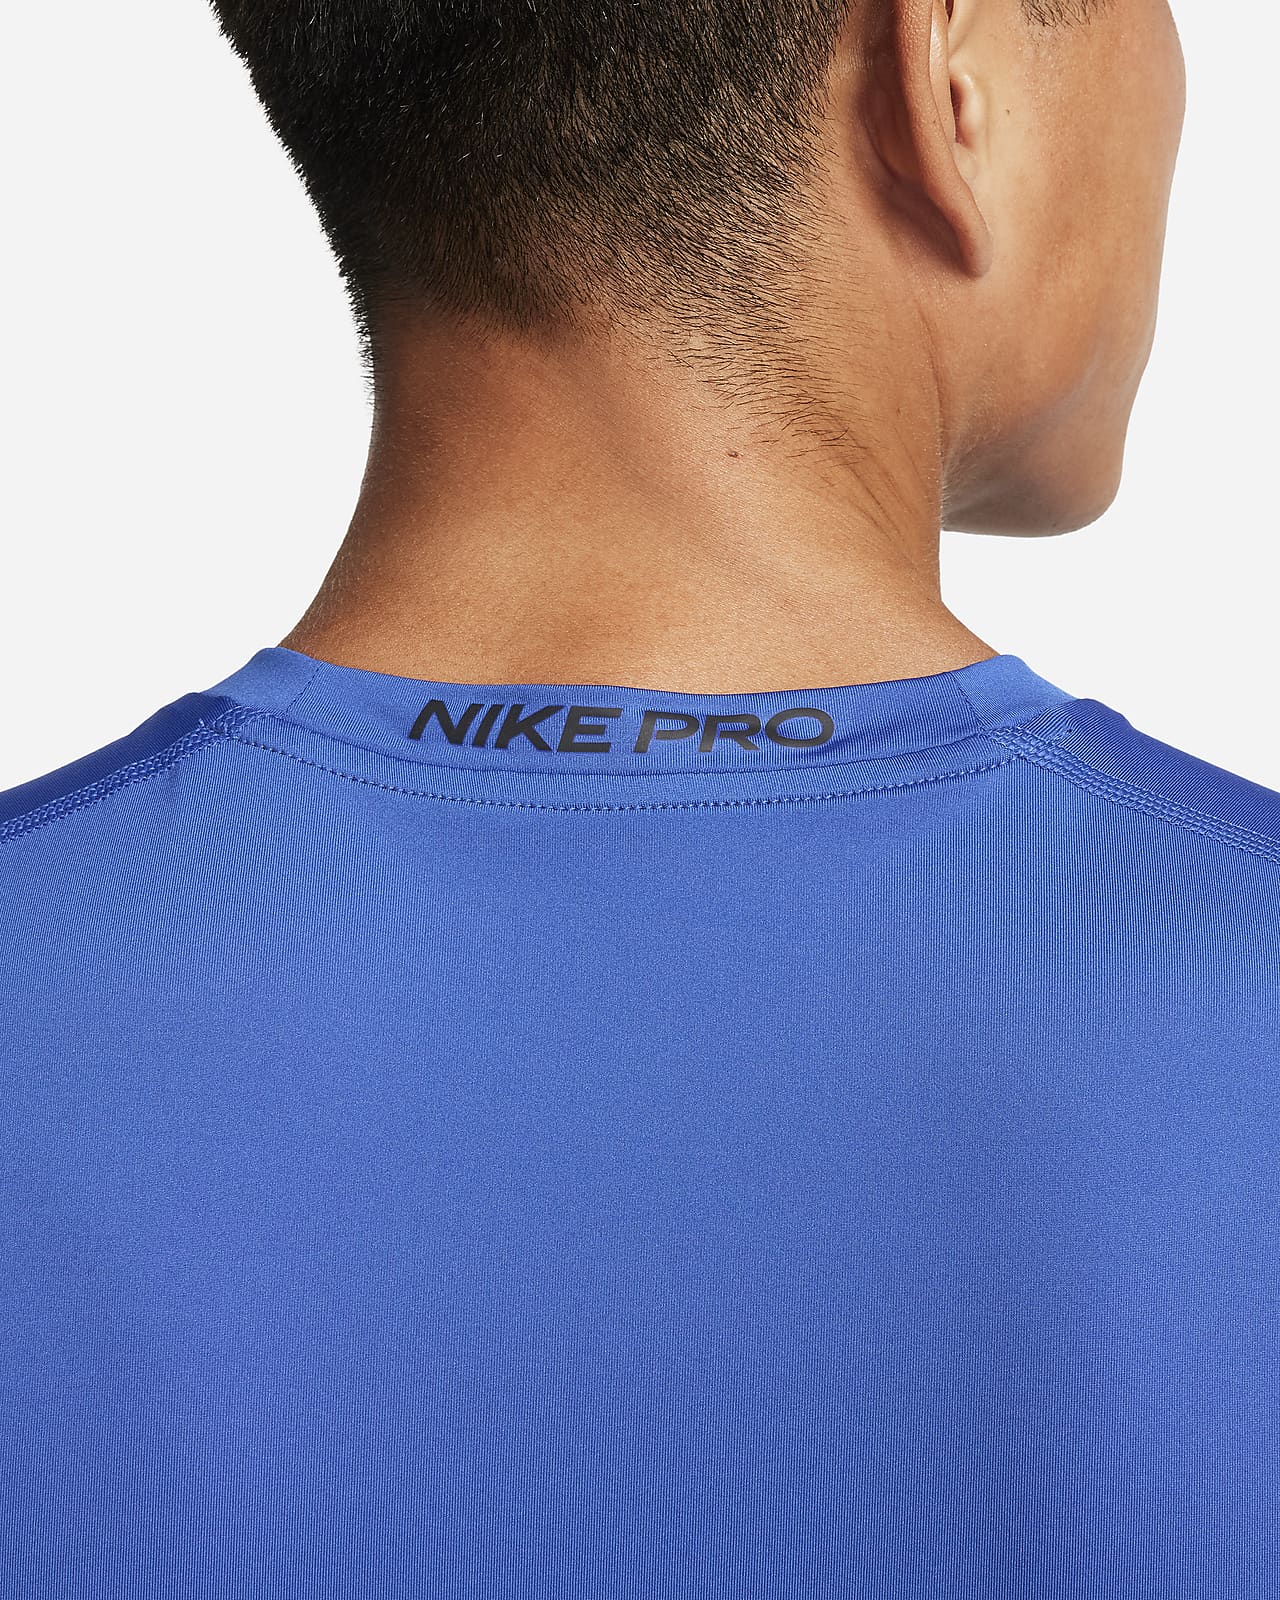 Nike, Shirts, Nike Pro Sleeveless Compression Top Xl Black